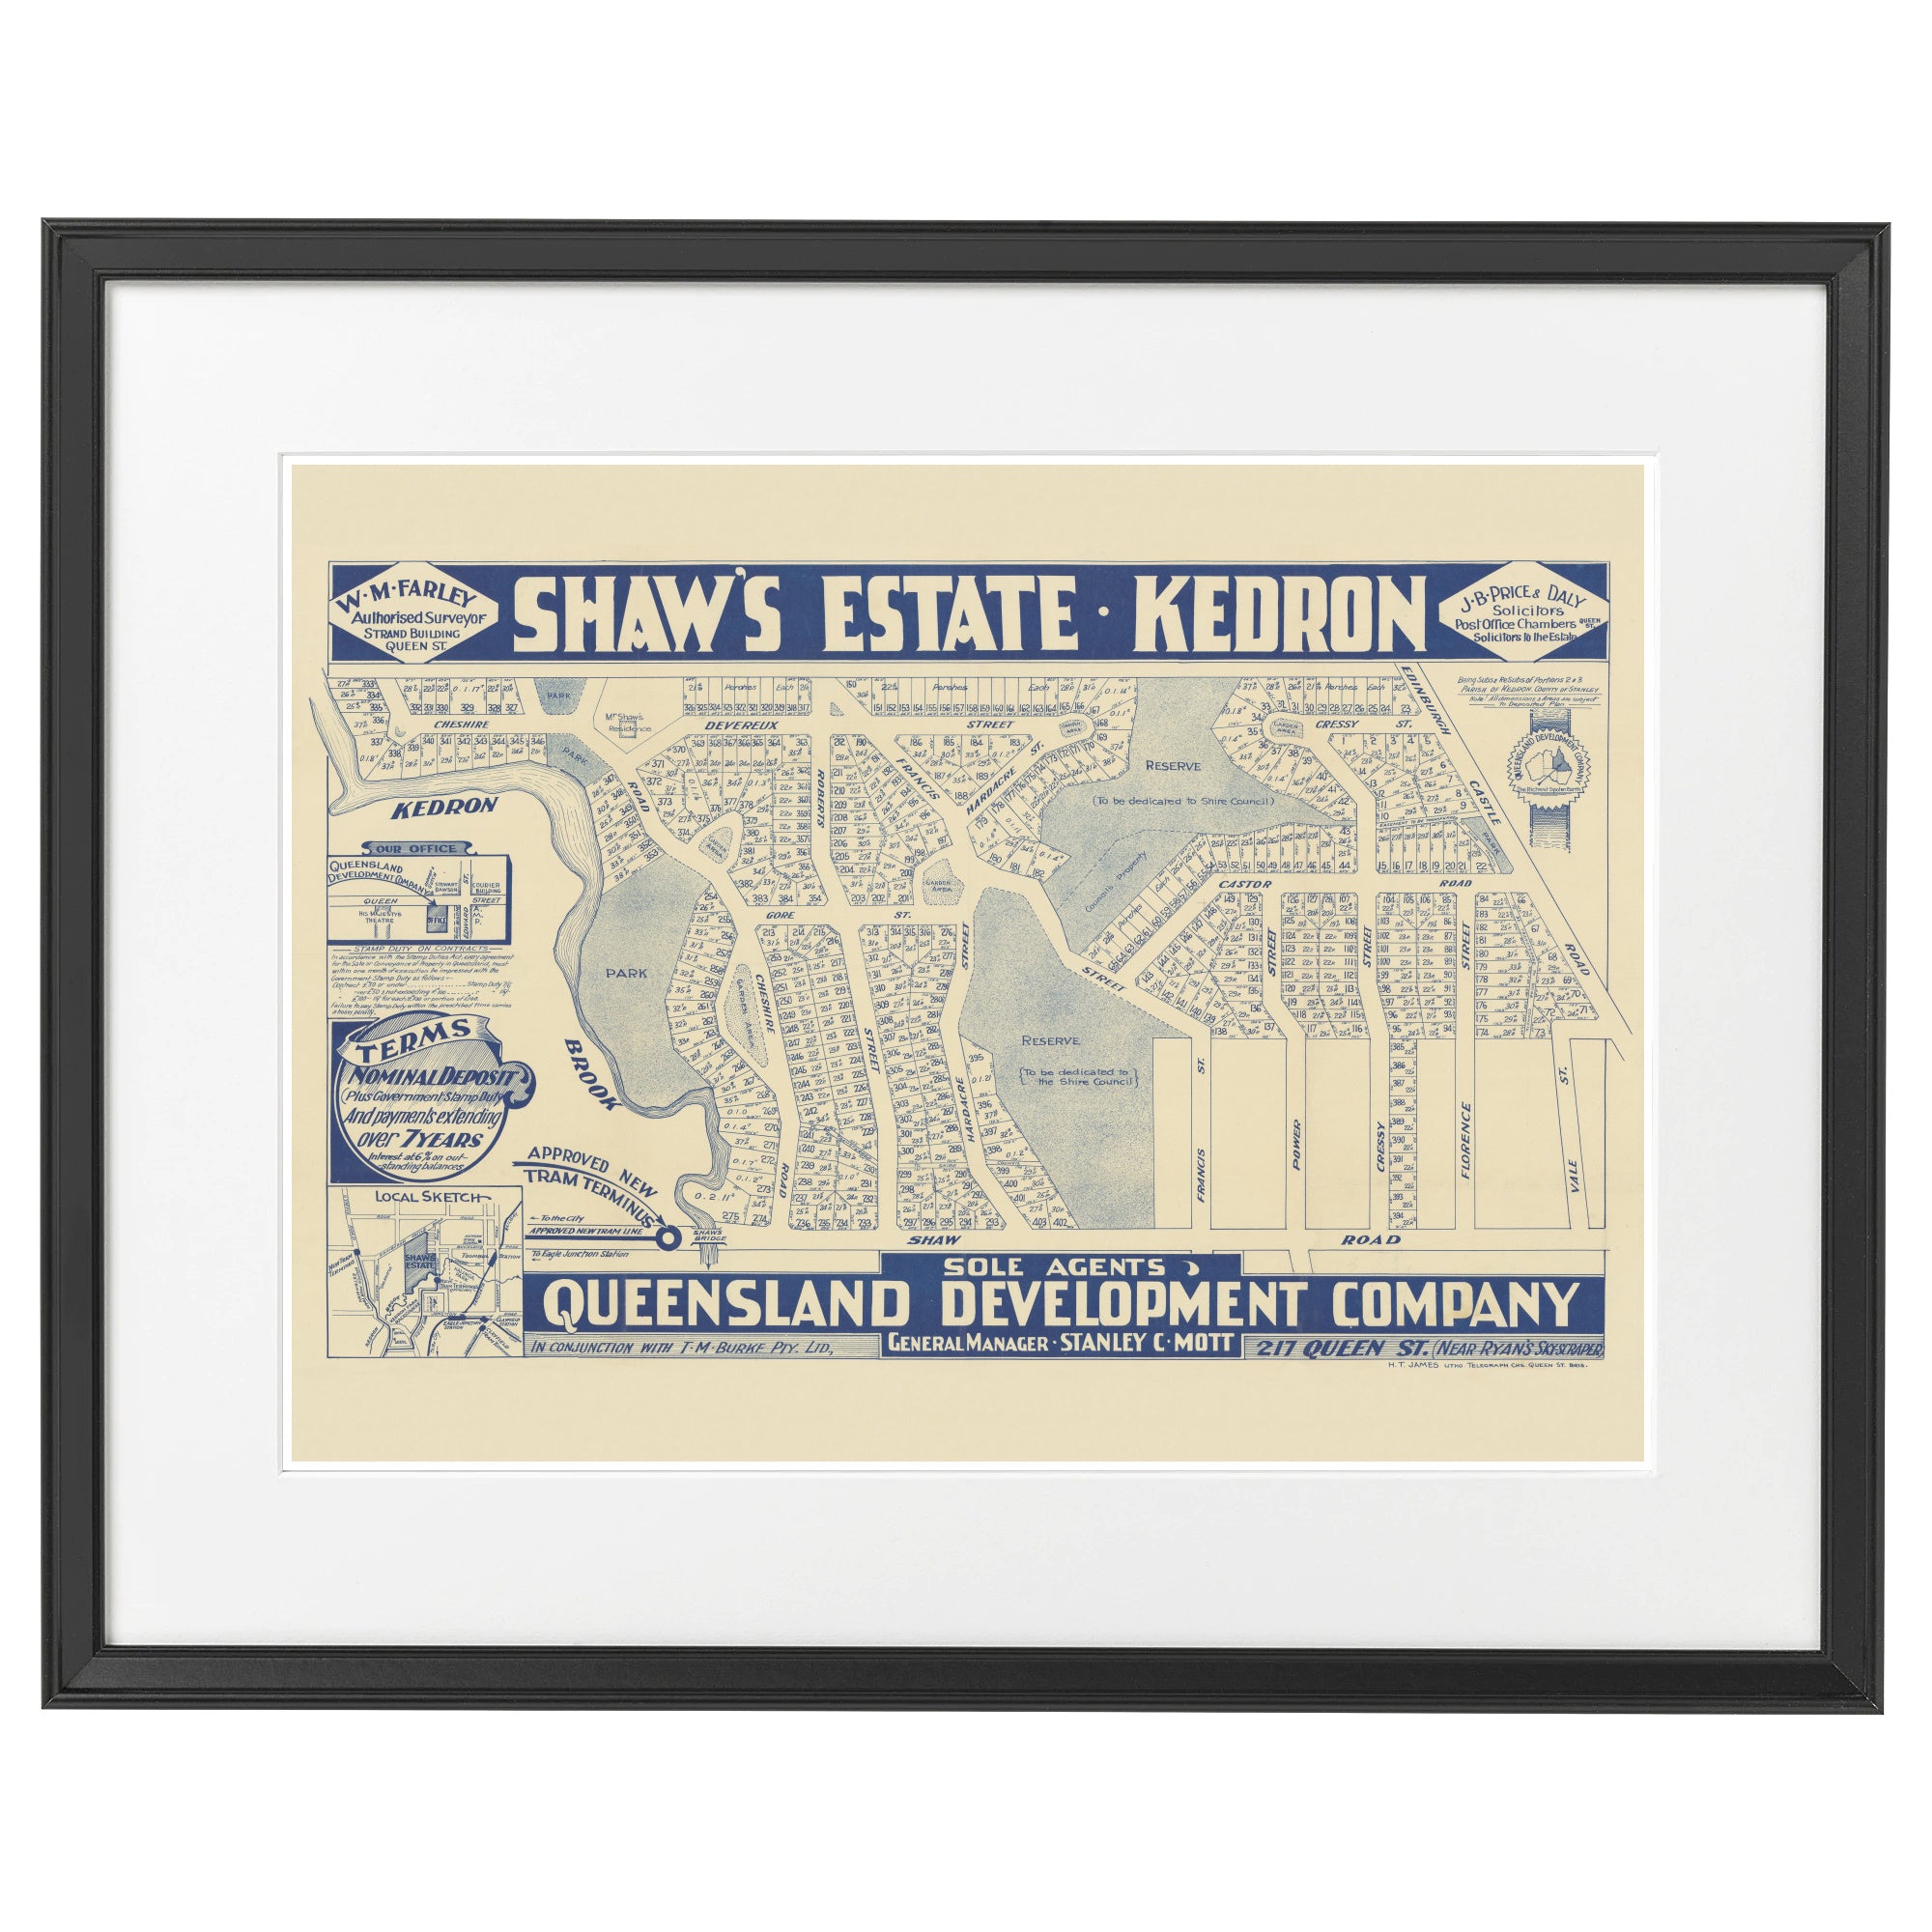 1925 Shaw's Estate, Kedron - 98 years ago today